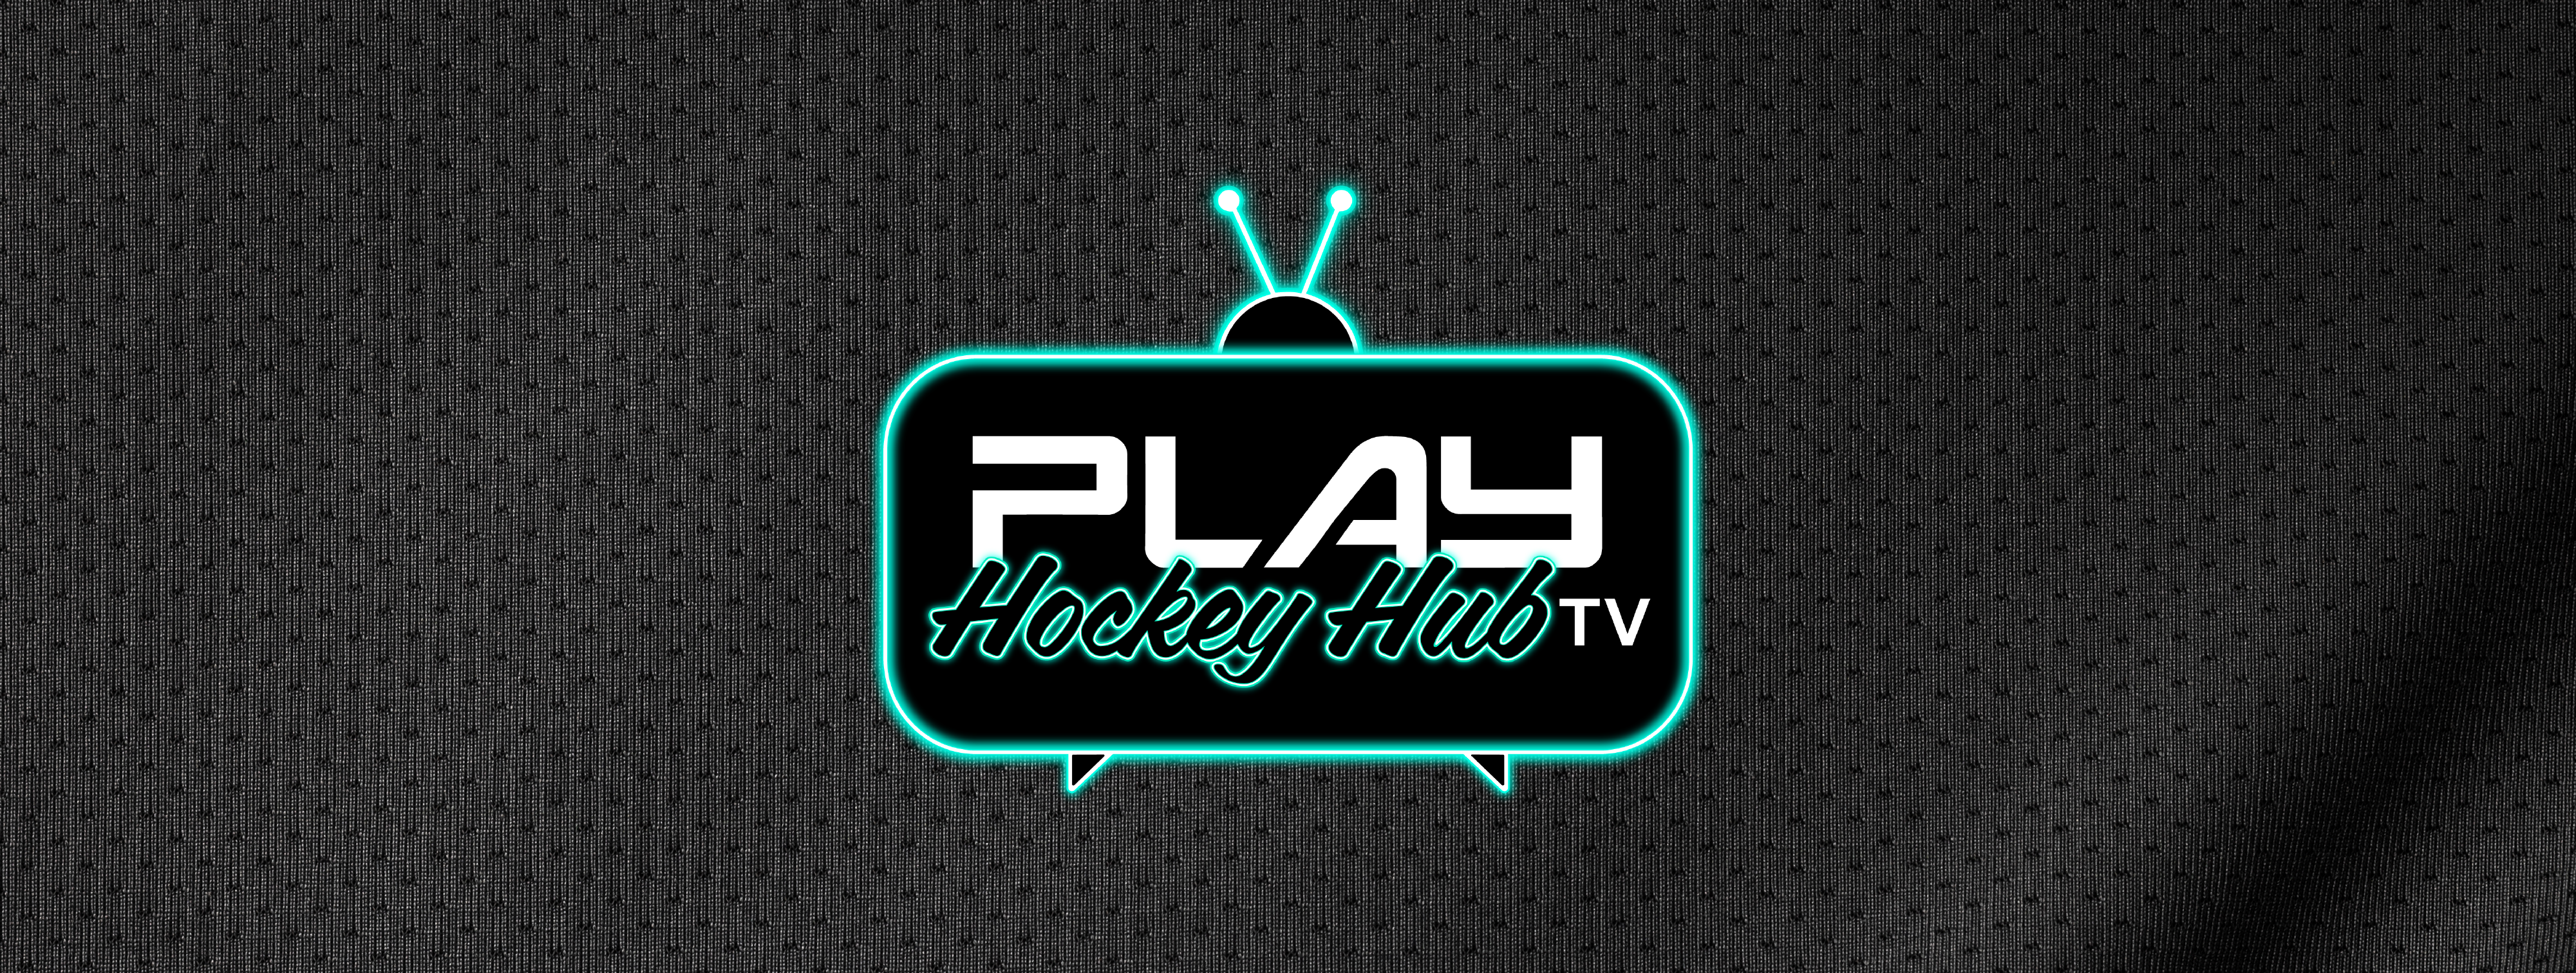 PLAYHockeyHubTV-HEADER1-02